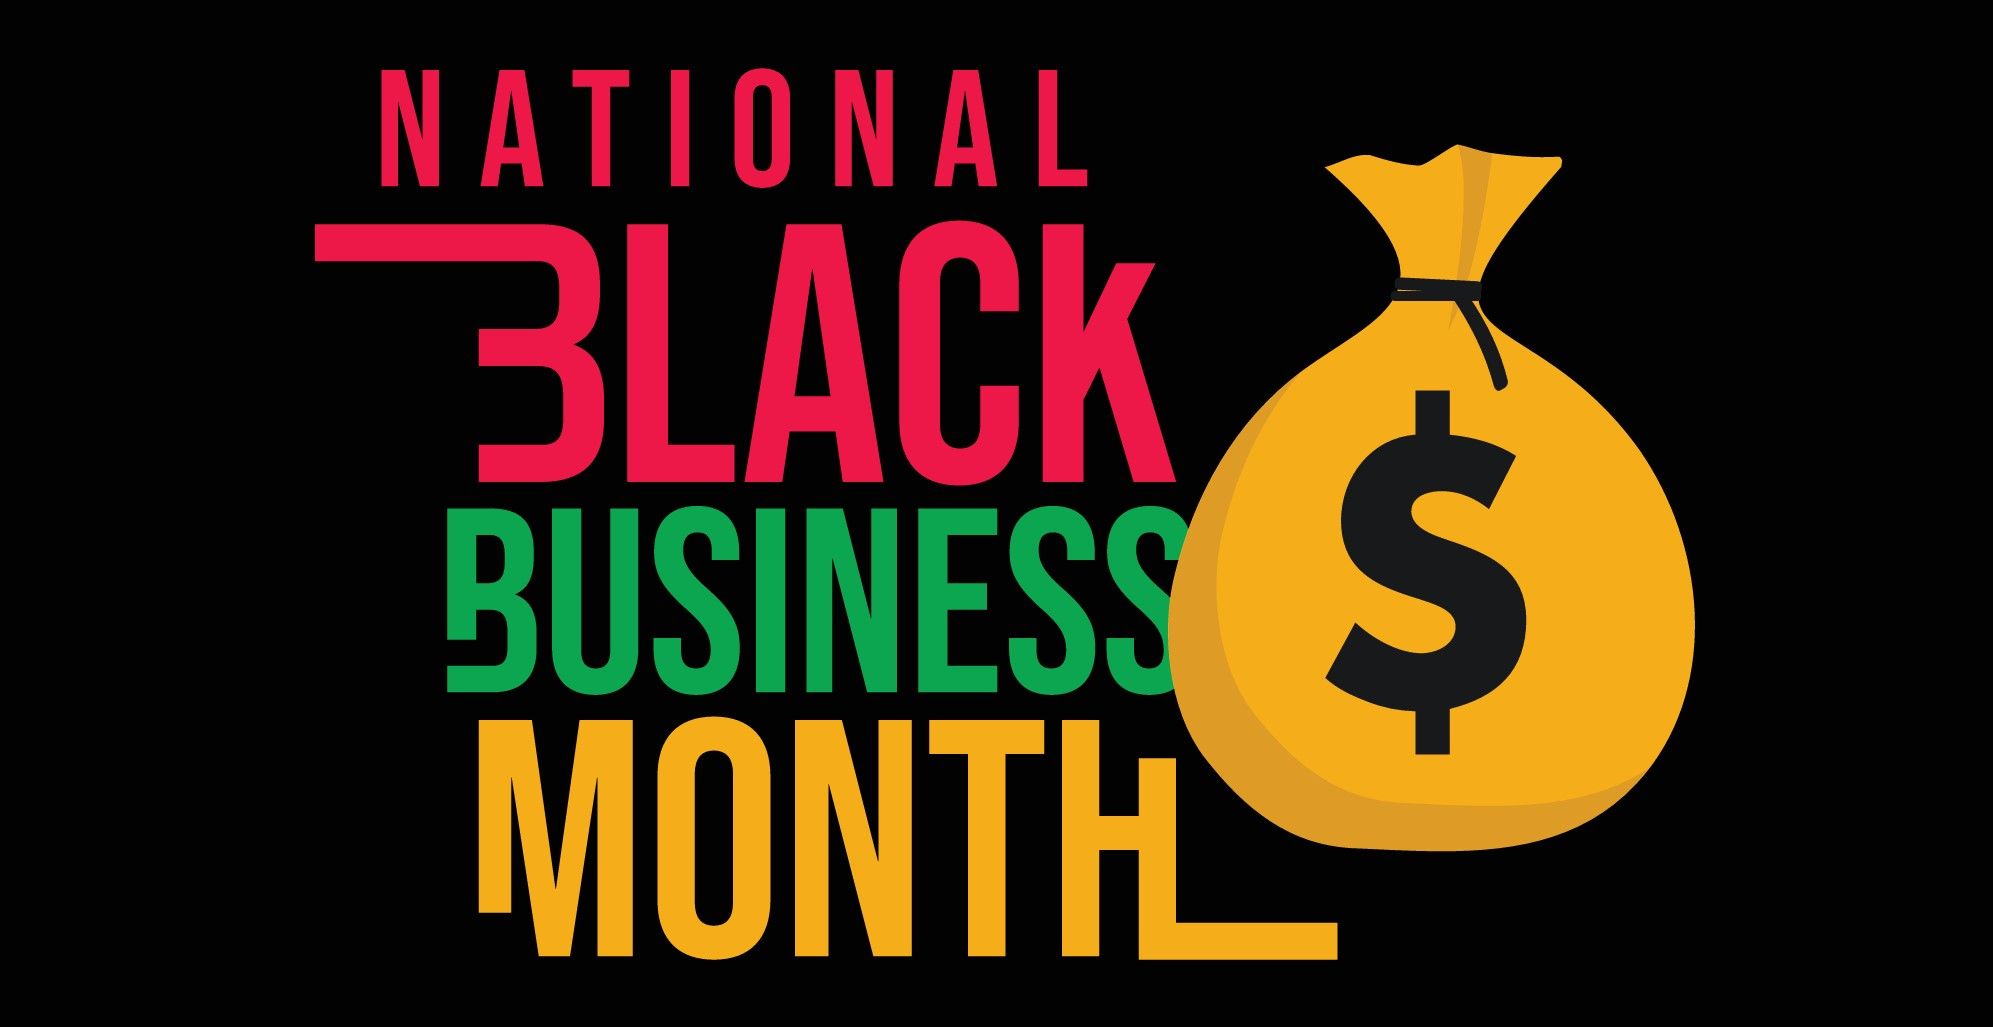 Natl-Black-Business-Month-2.1.jpg